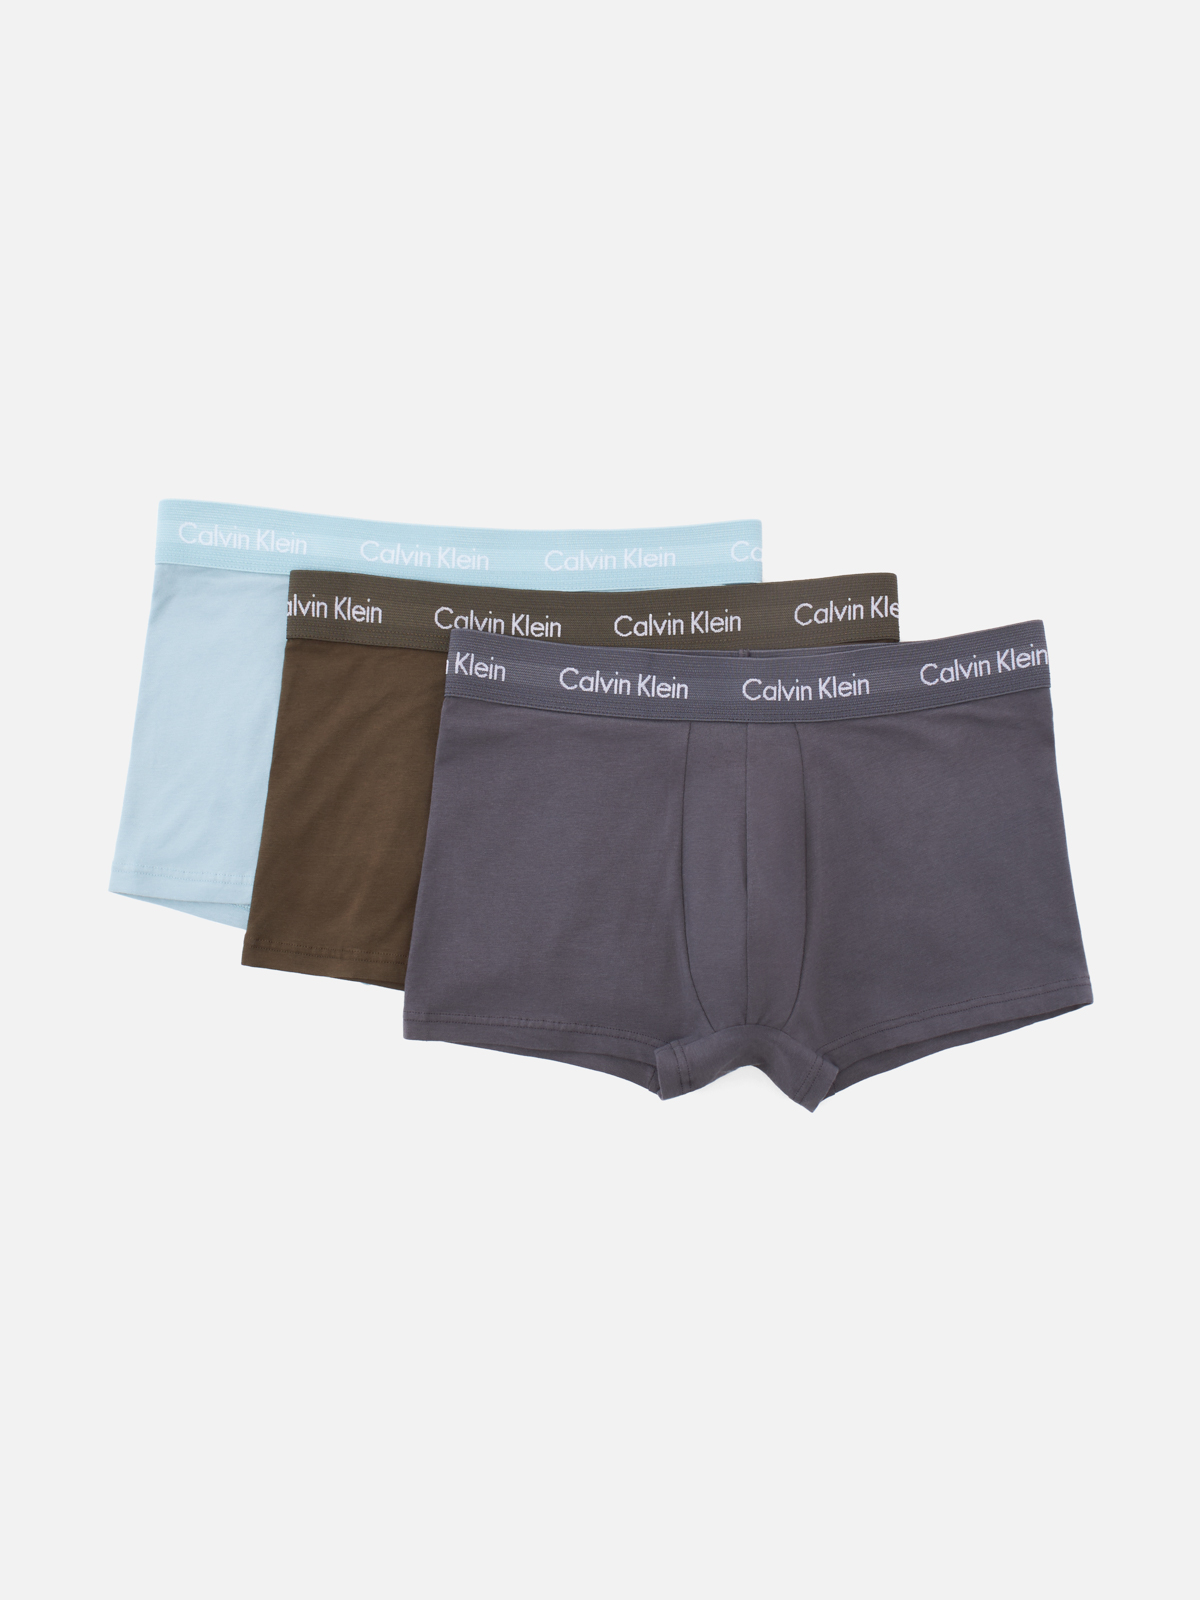 Комплект белья Calvin Klein для мужчин, grey, tourmaline, olive, размер XL, Sleek